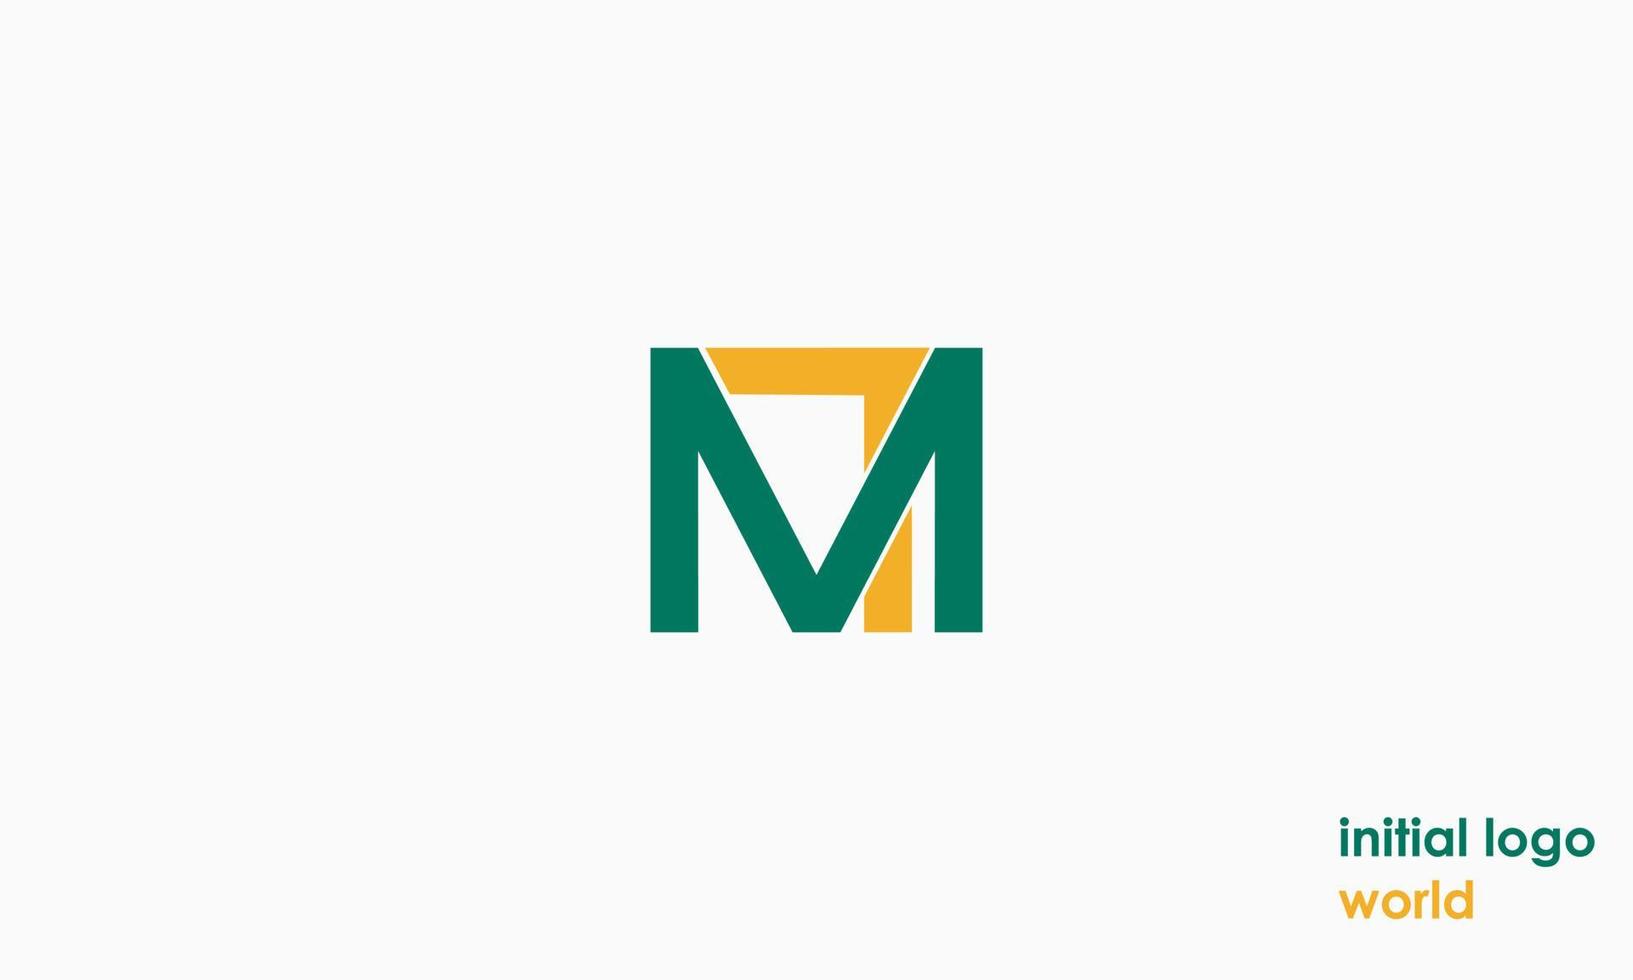 letras do alfabeto iniciais monograma logotipo mt, tm, m e t vetor